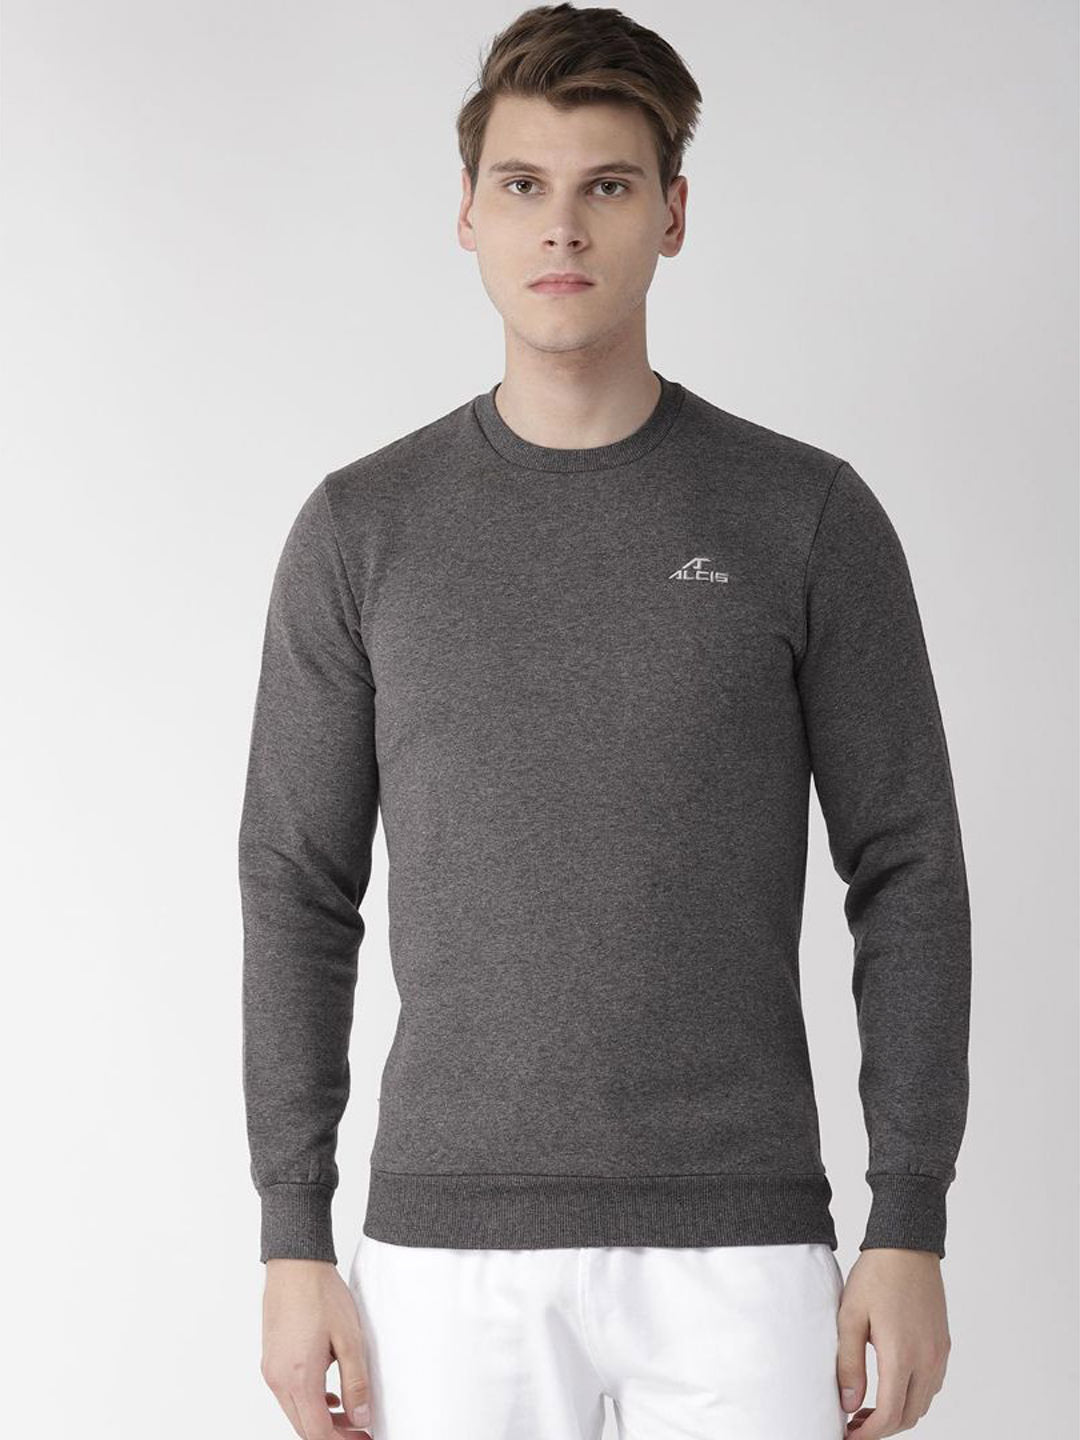 Alcis Men Charcoal Grey Solid Sports Sweatshirt